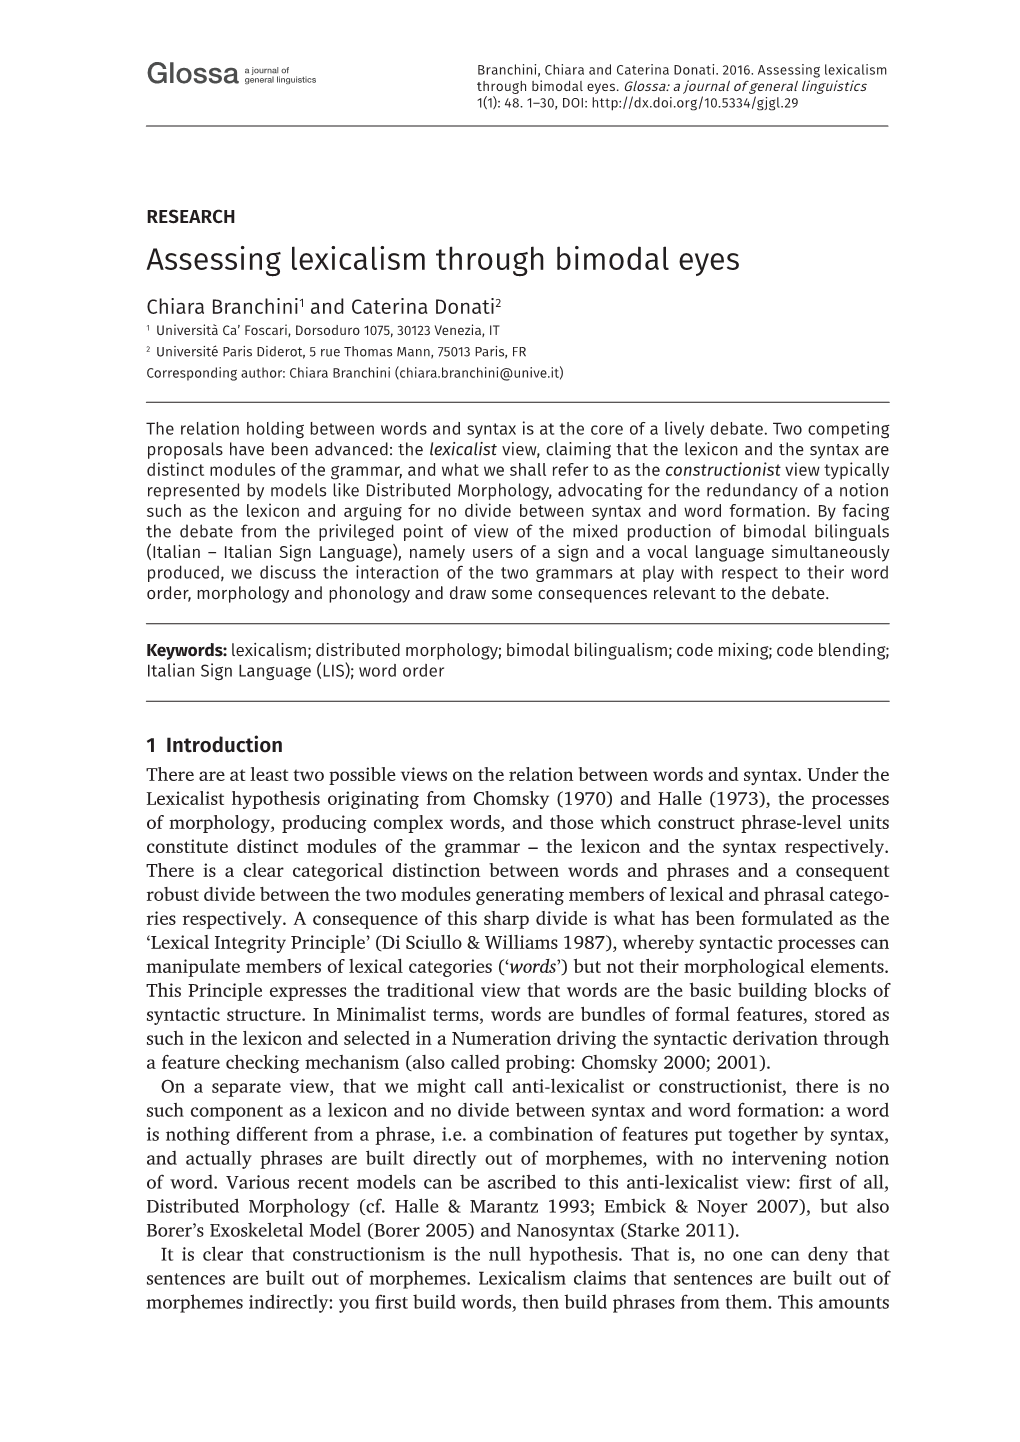 Assessing Lexicalism Through Bimodal Eyes